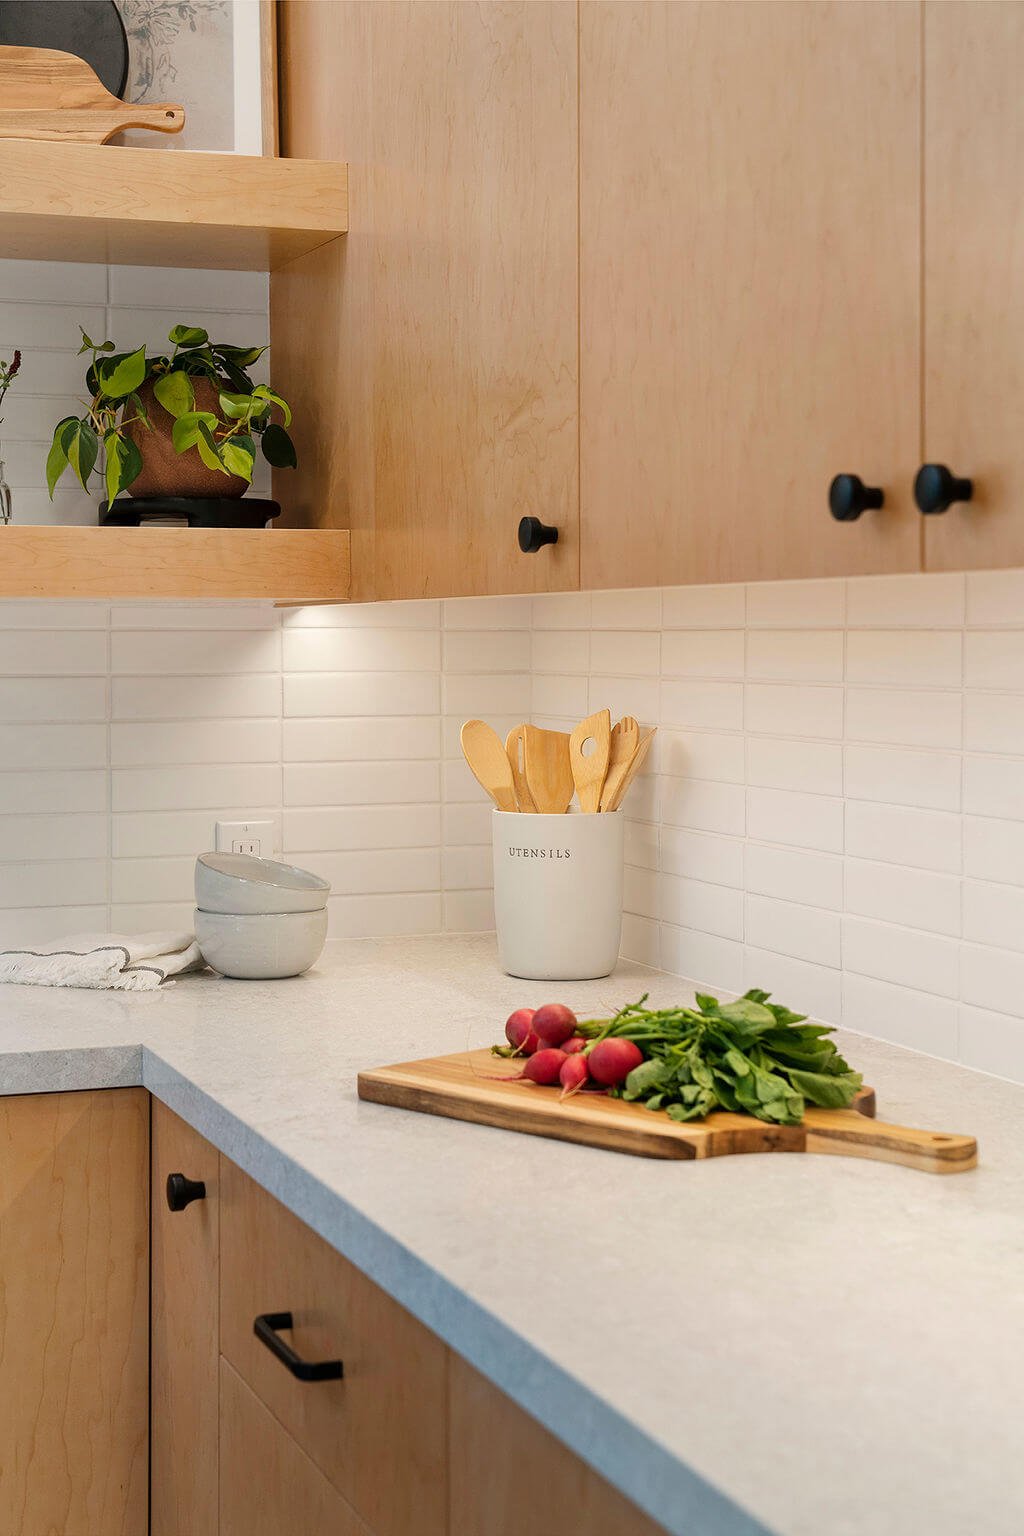 Berkeley Kitchen Remodel - Kitchen Cabinets & Countertop.jpg